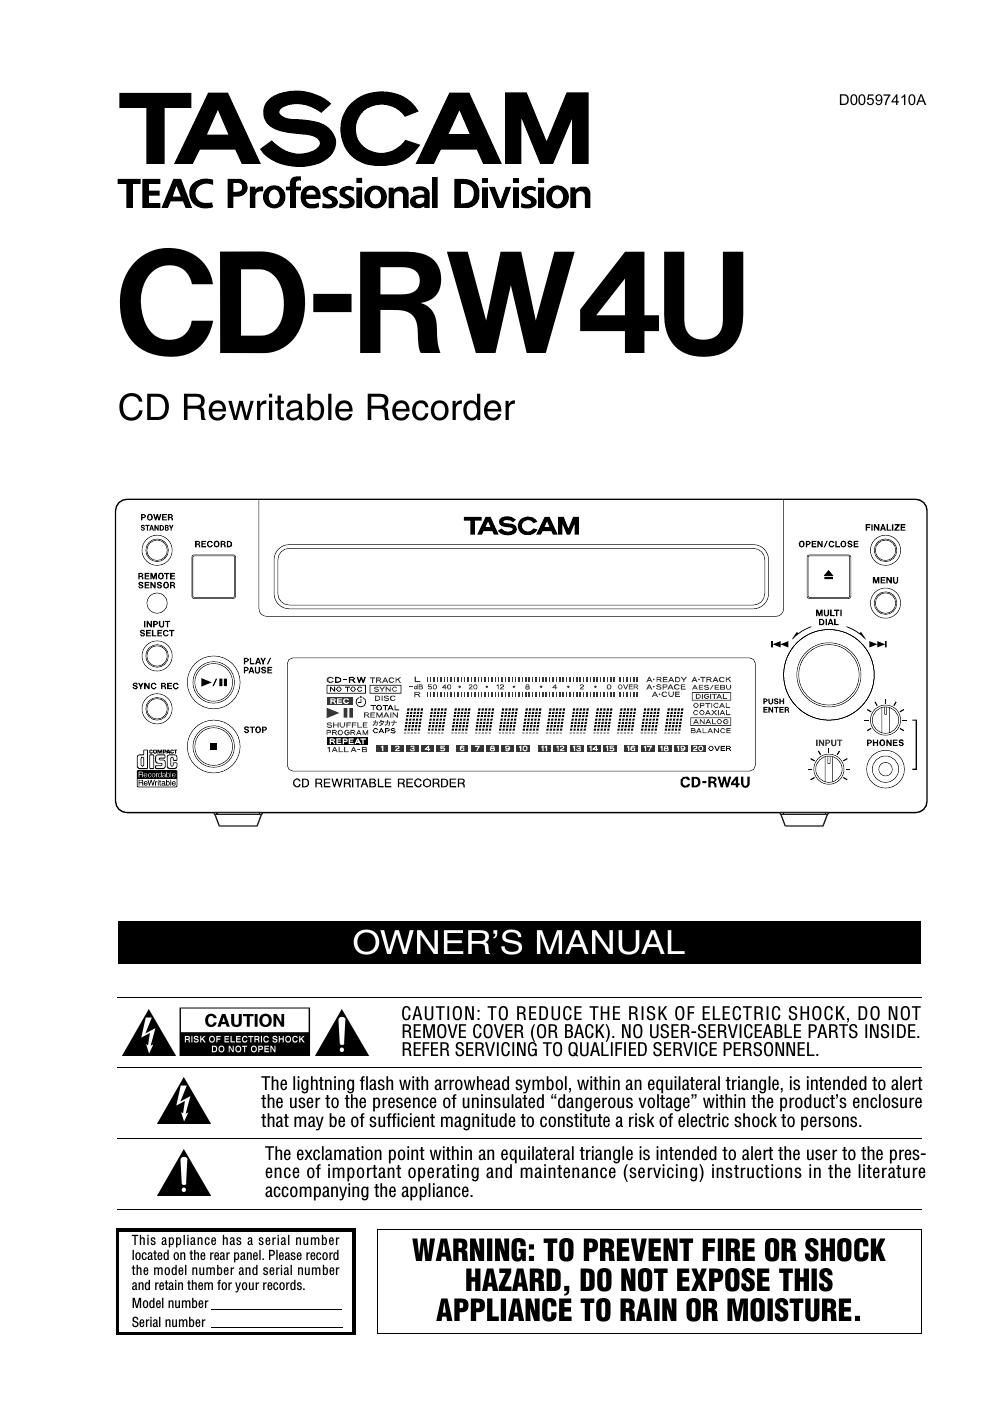 Tascam CD RW 4U Owners Manual